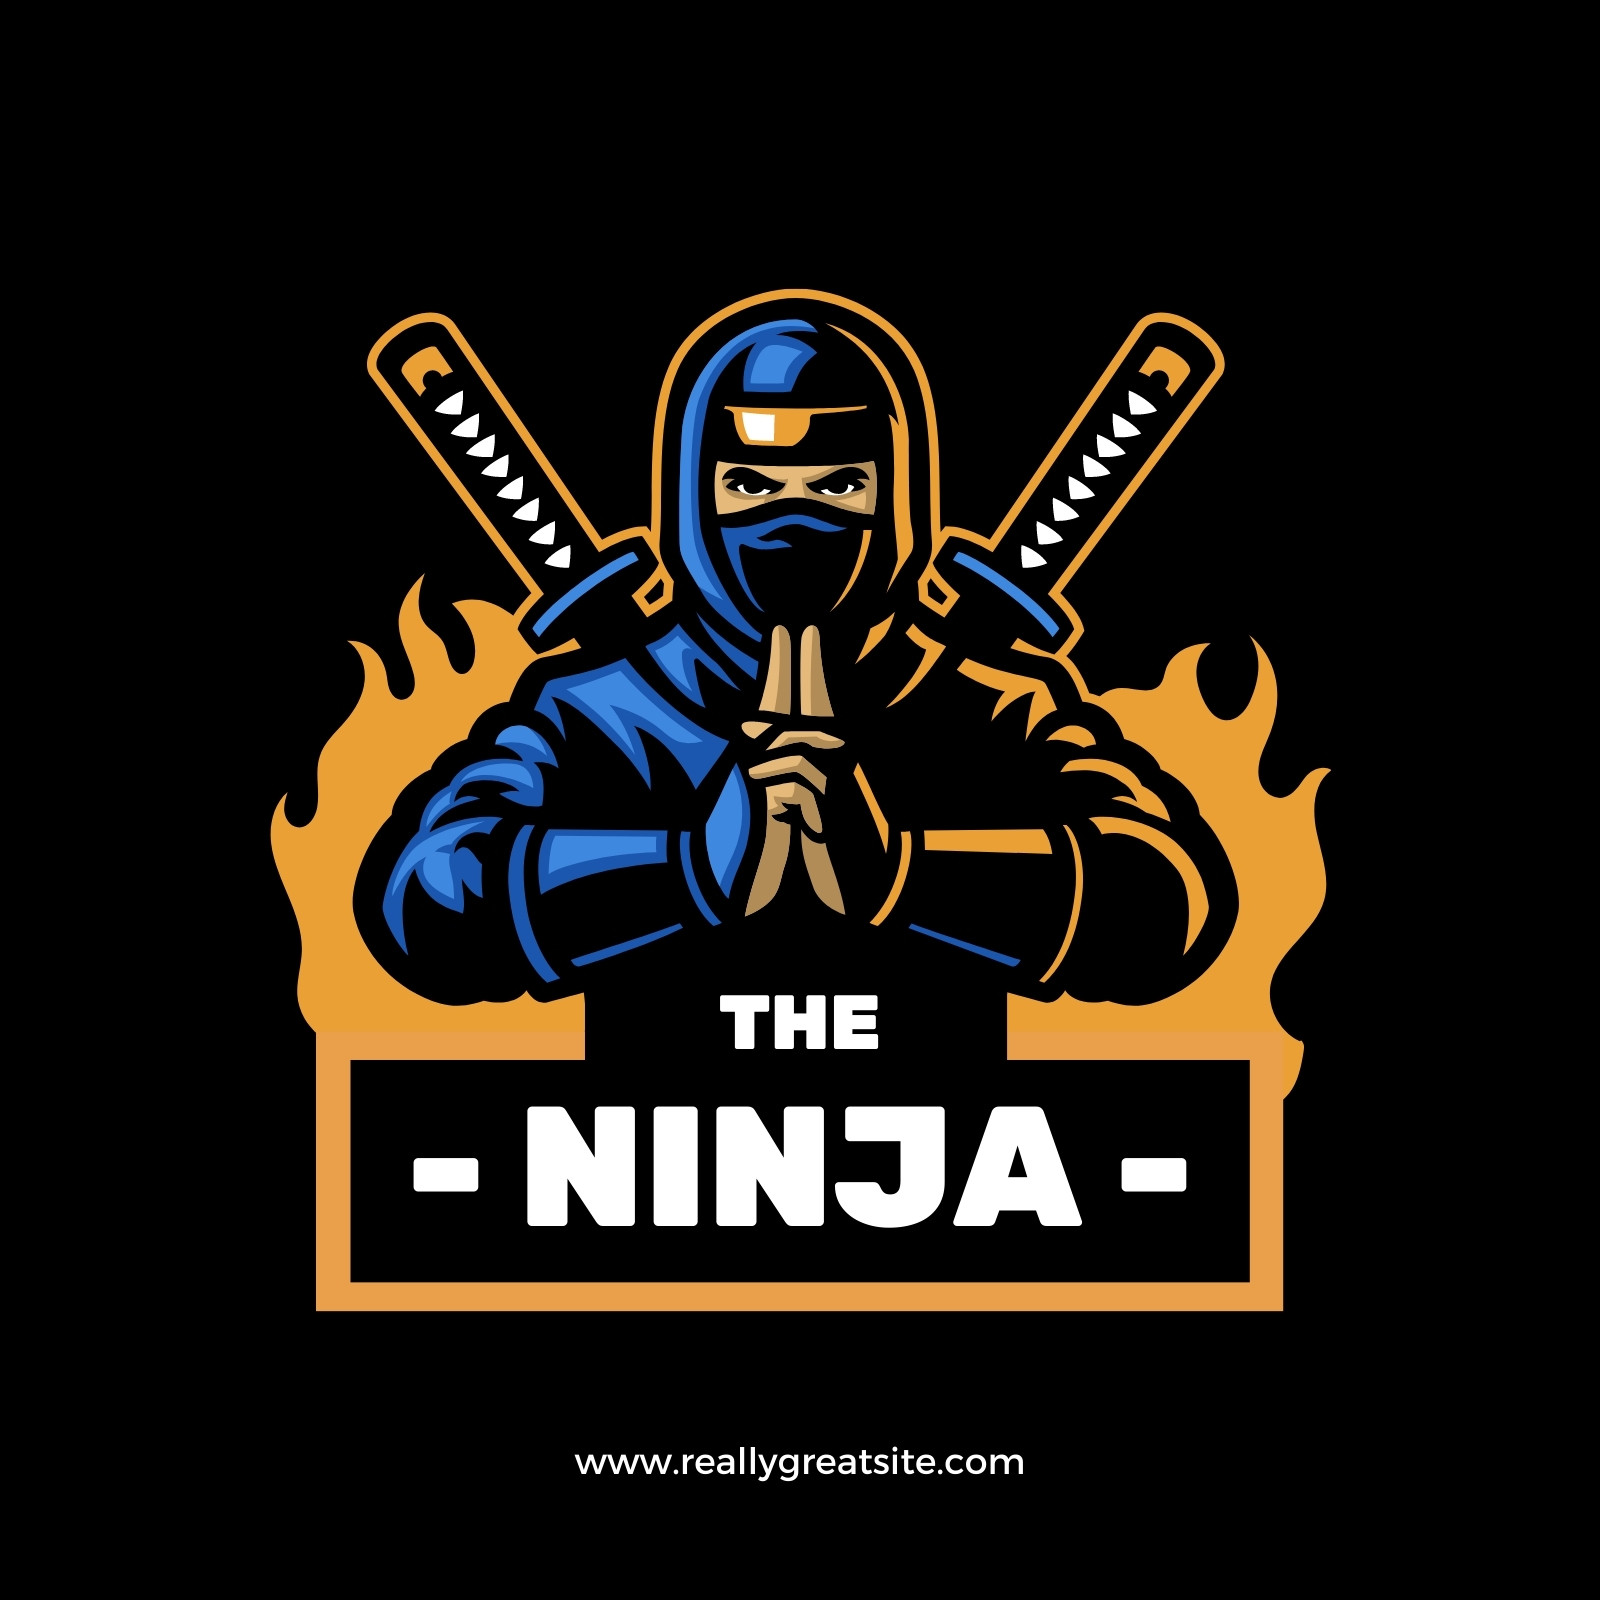 Ninja gaming logo stock vector. Illustration of mask - 200426598